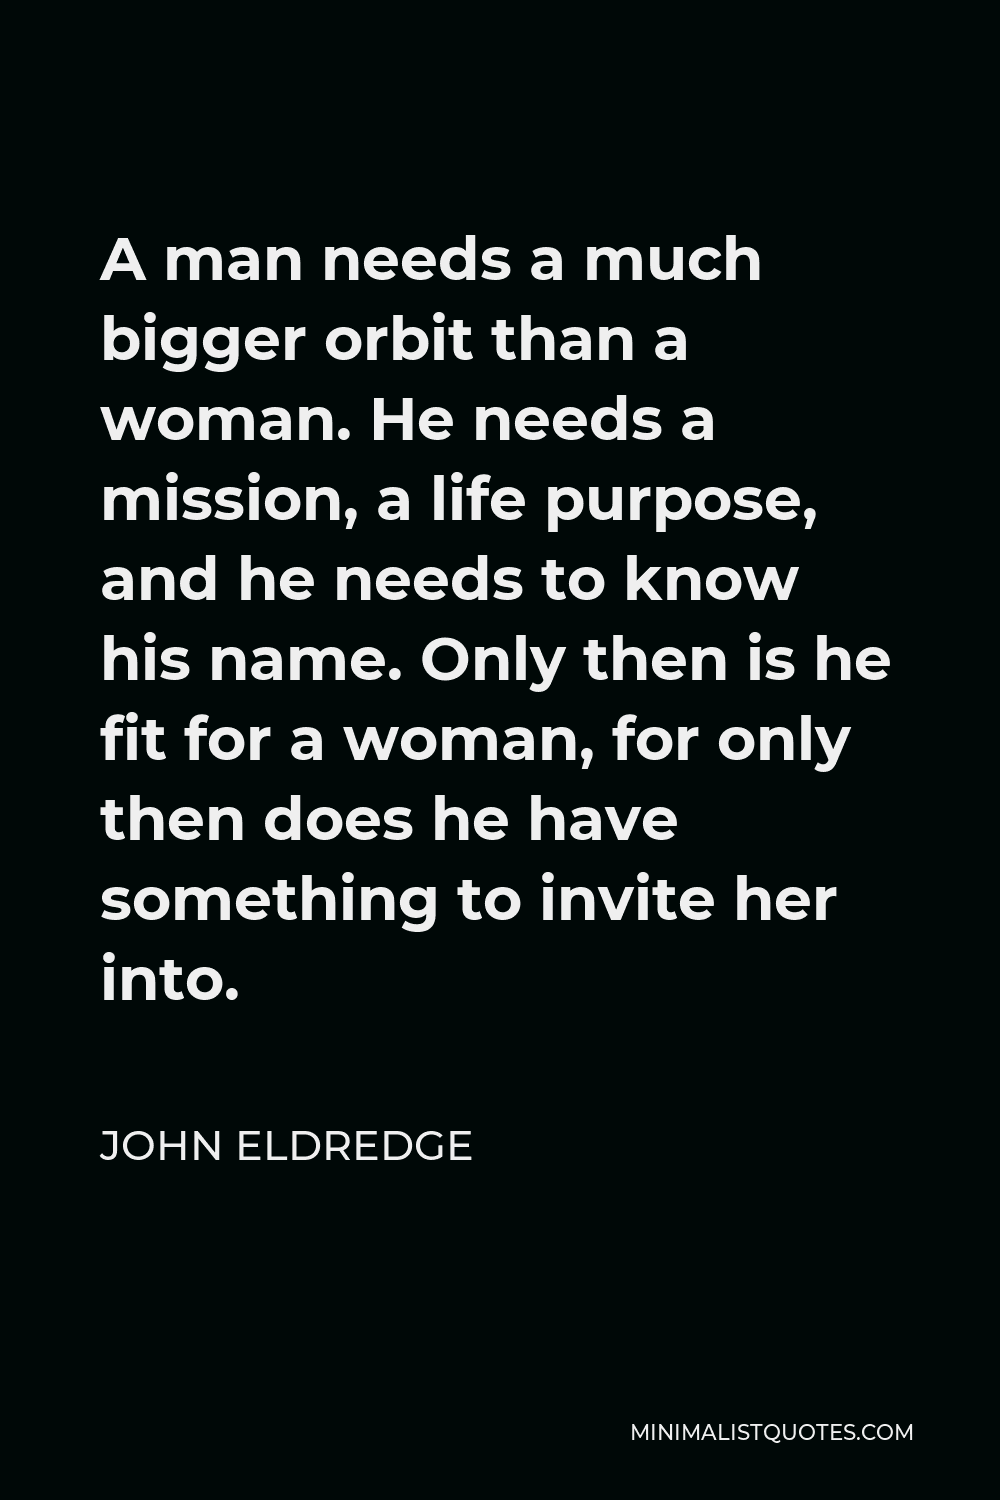 John Eldredge Quote: A man needs a much bigger orbit than a woman